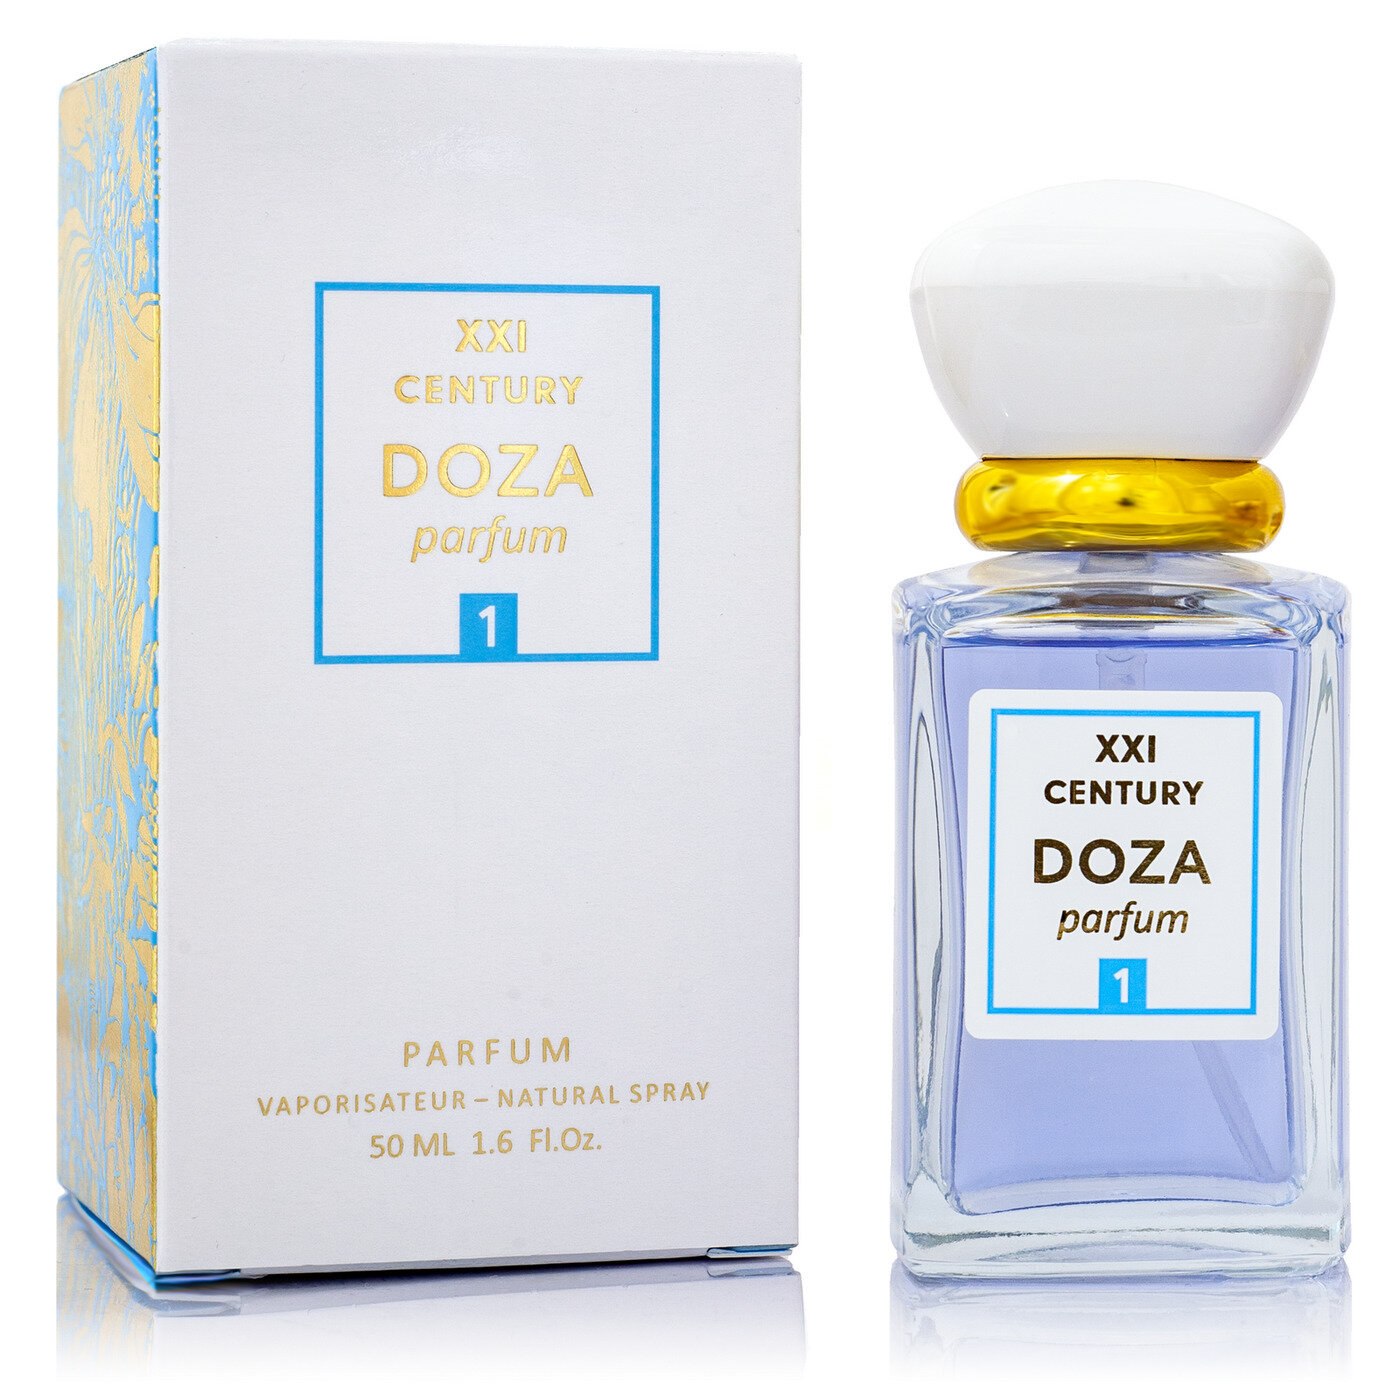 XXI CENTURY духи DOZA Parfum №1, 50 мл